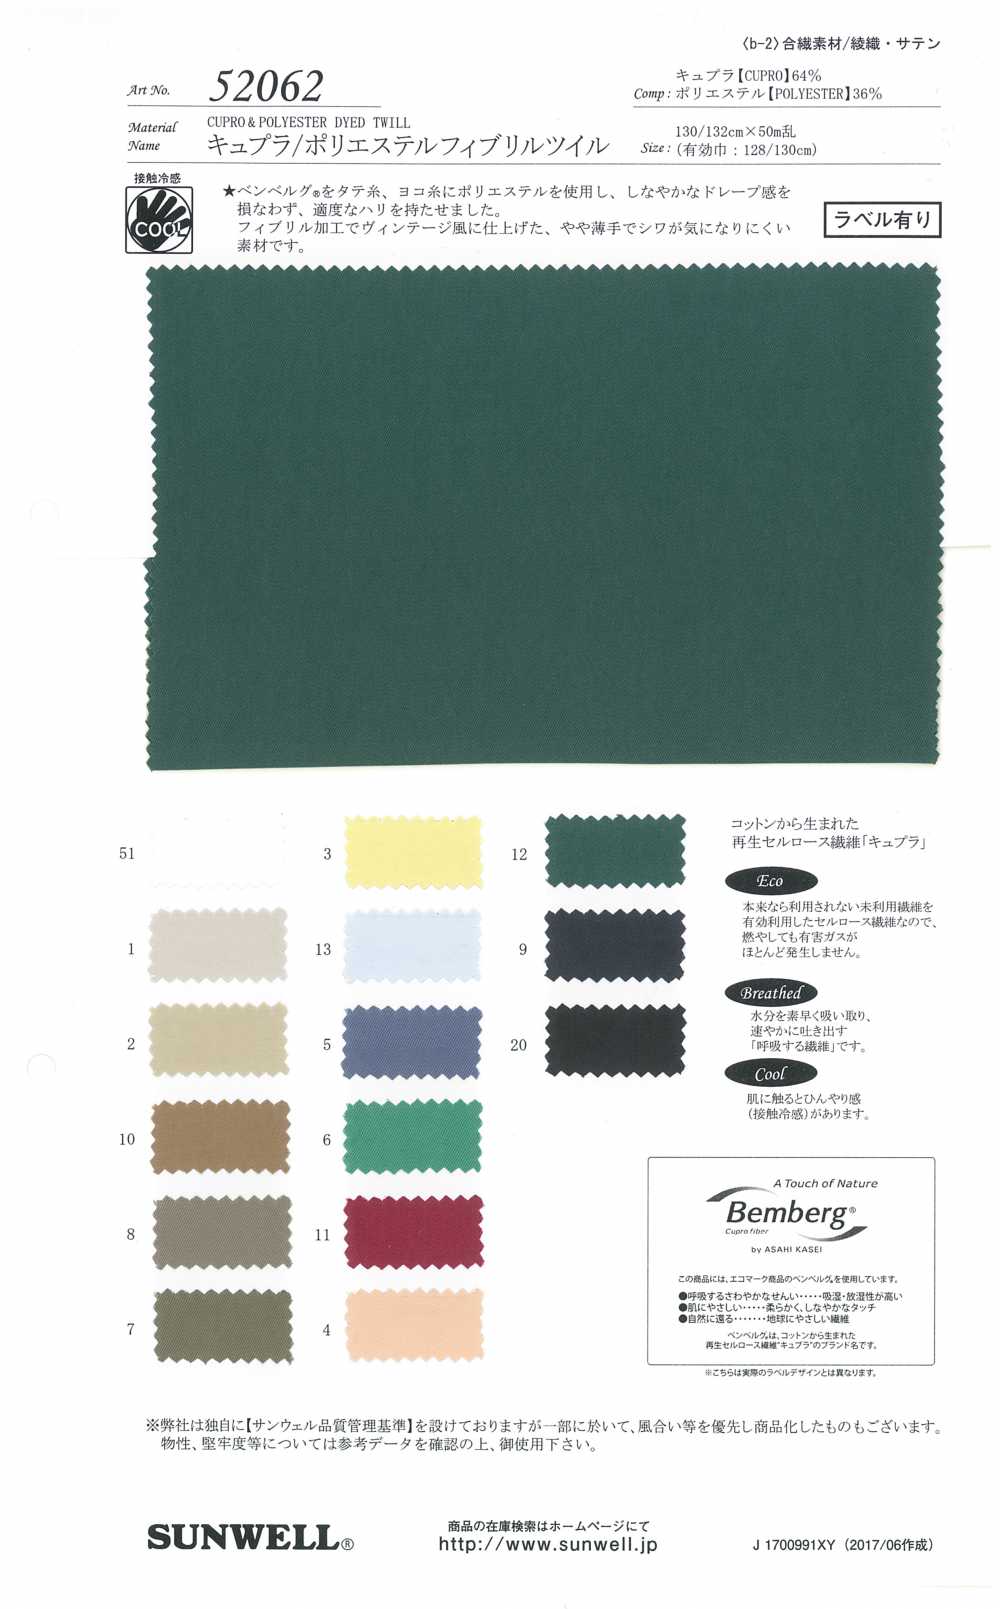 52062 Cupra / Polyester Fibril Twill[Textile / Fabric] SUNWELL